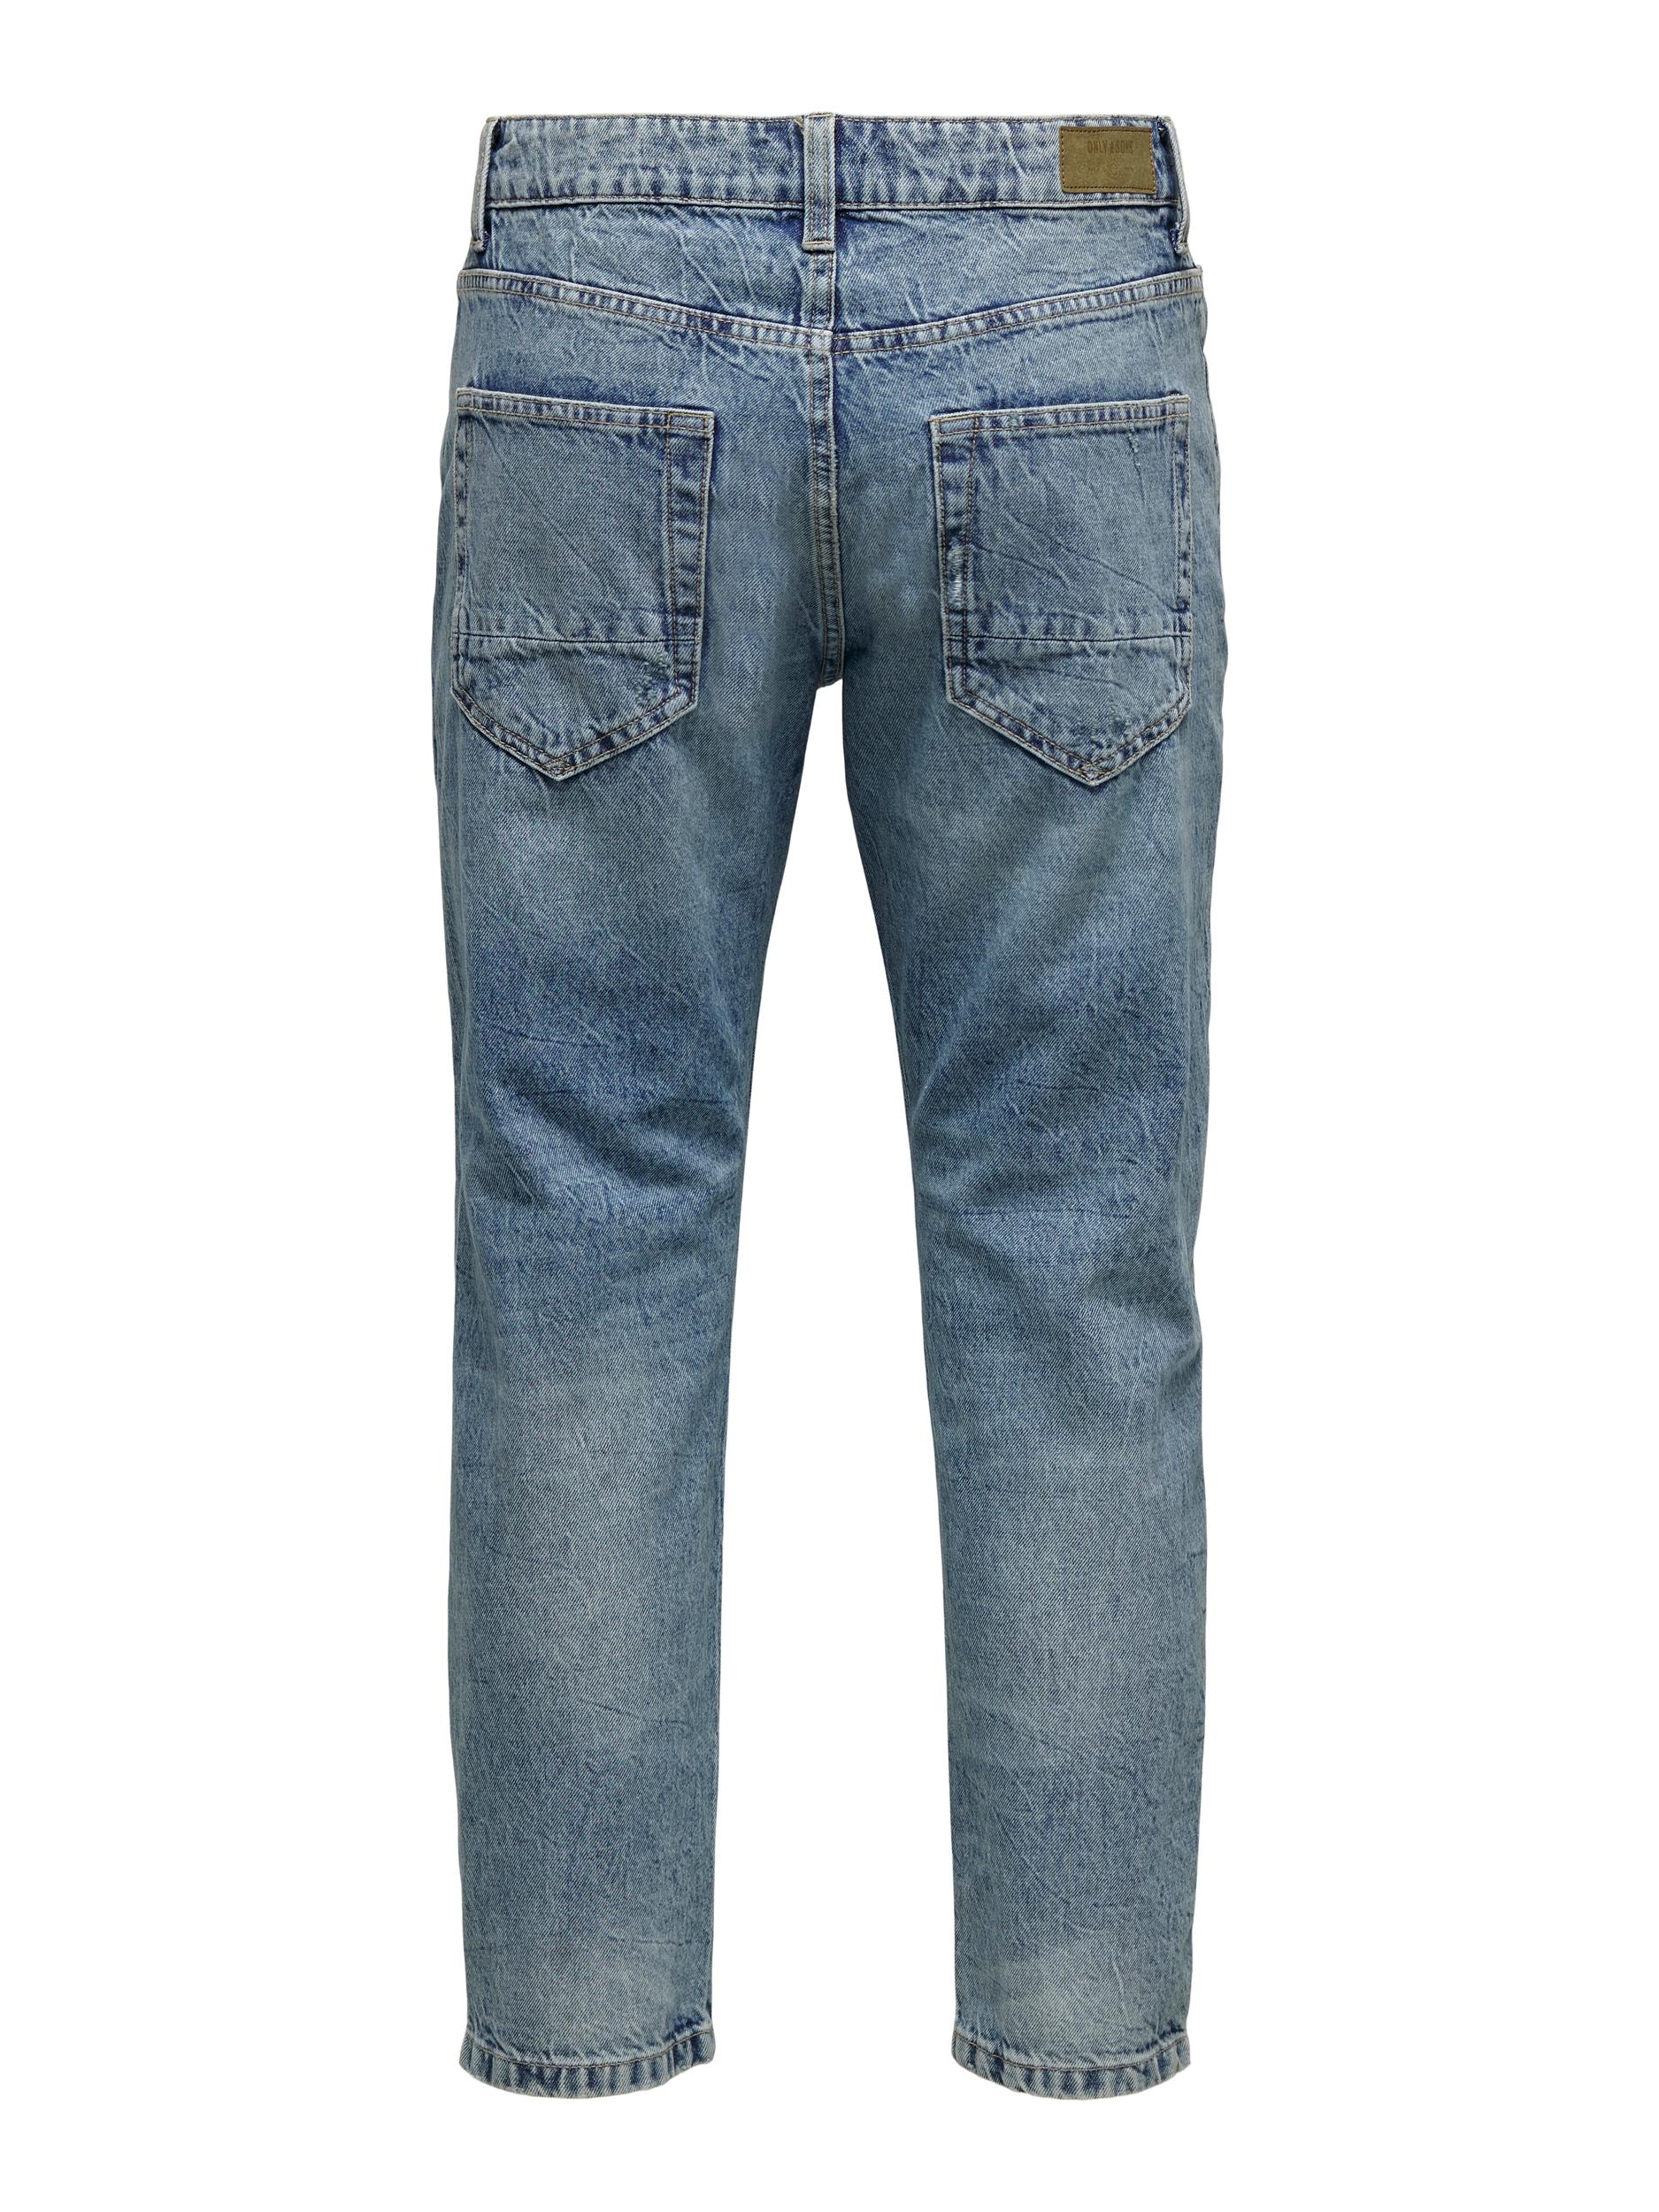 ONLY Avi Beam Jeans, Blue Denim, W29/L30